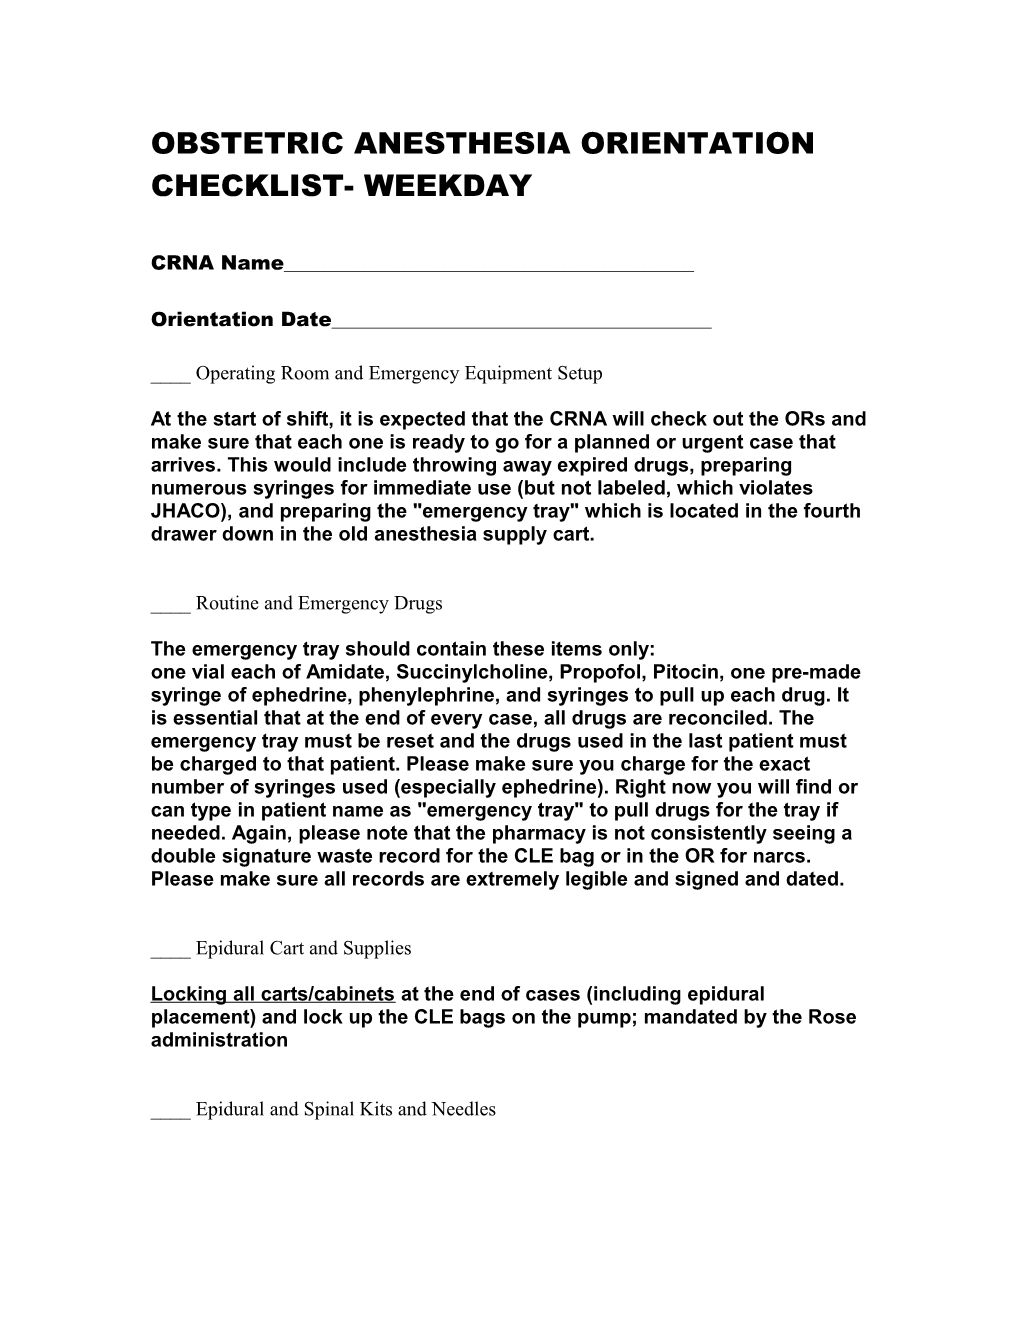 Obstetric Anesthesia Orientation Checklist- Weekday